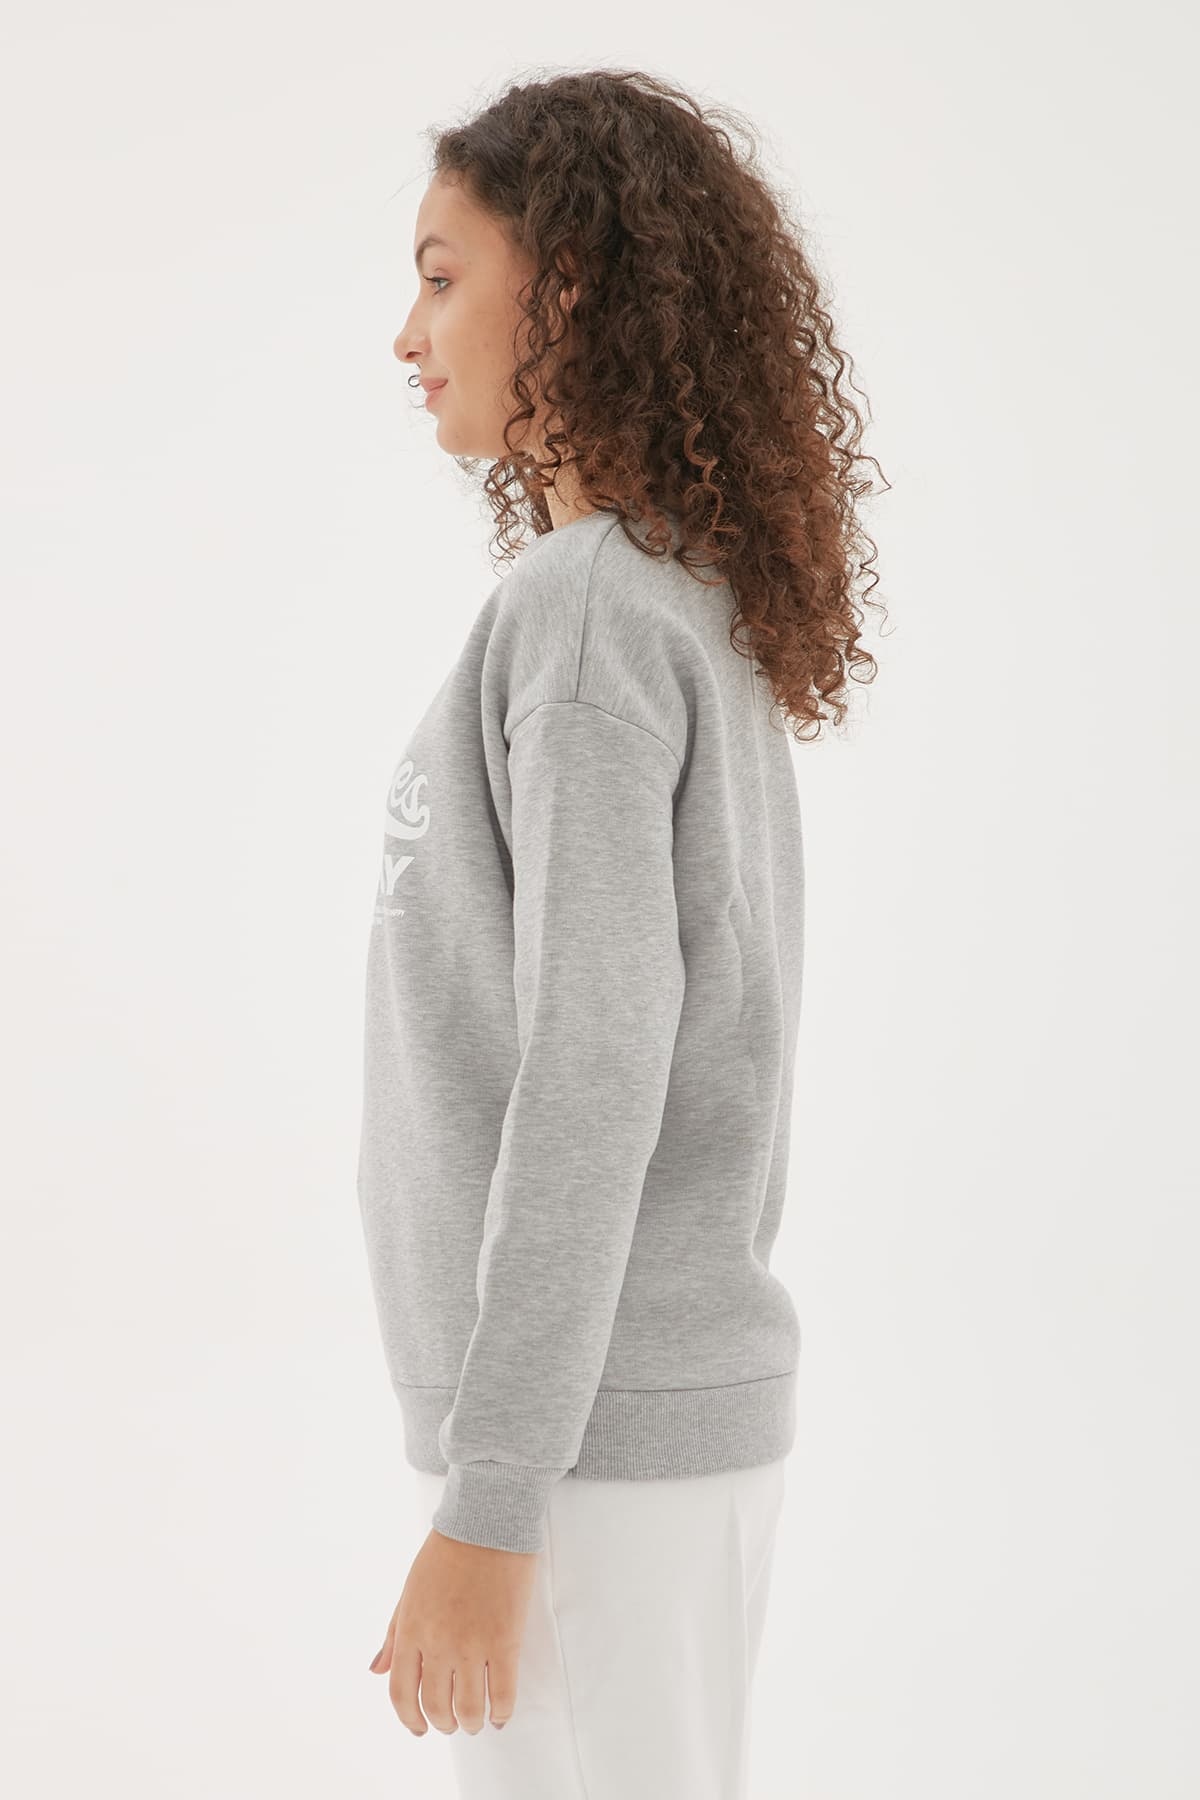 Baskılı Sweatshirt Gri / Grey | Fashion Friends